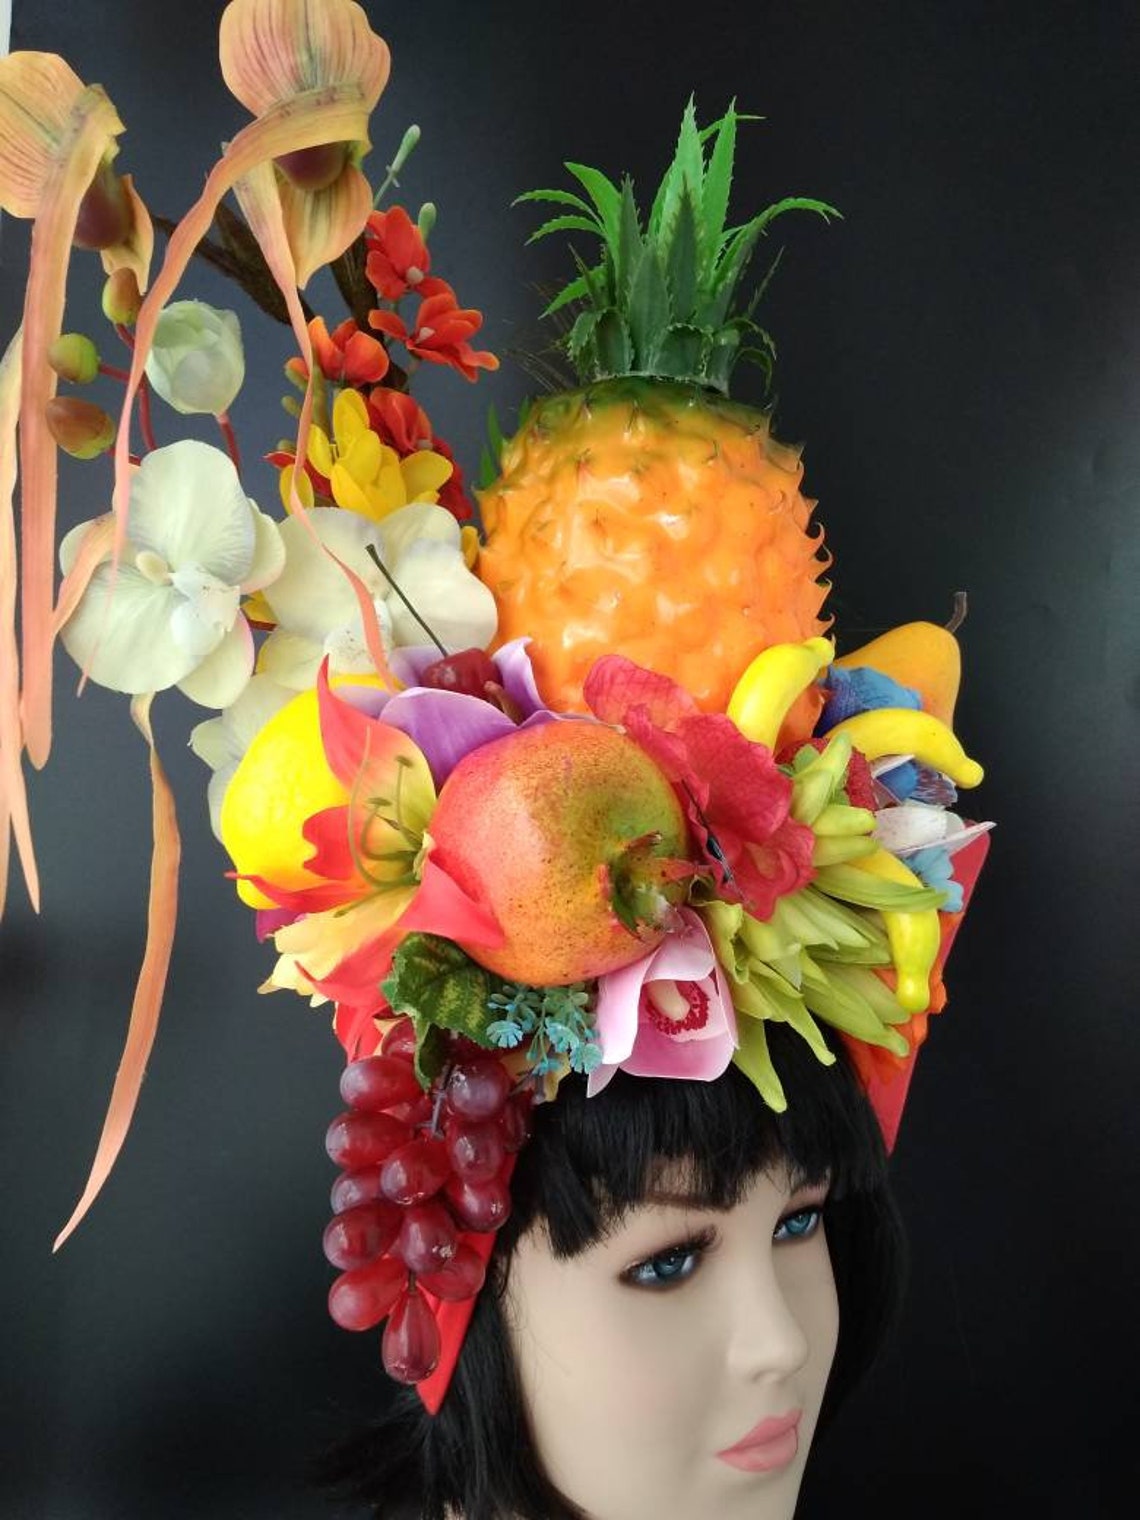 Fruit headdress with large pineapple Carmen Miranda turban | Etsy